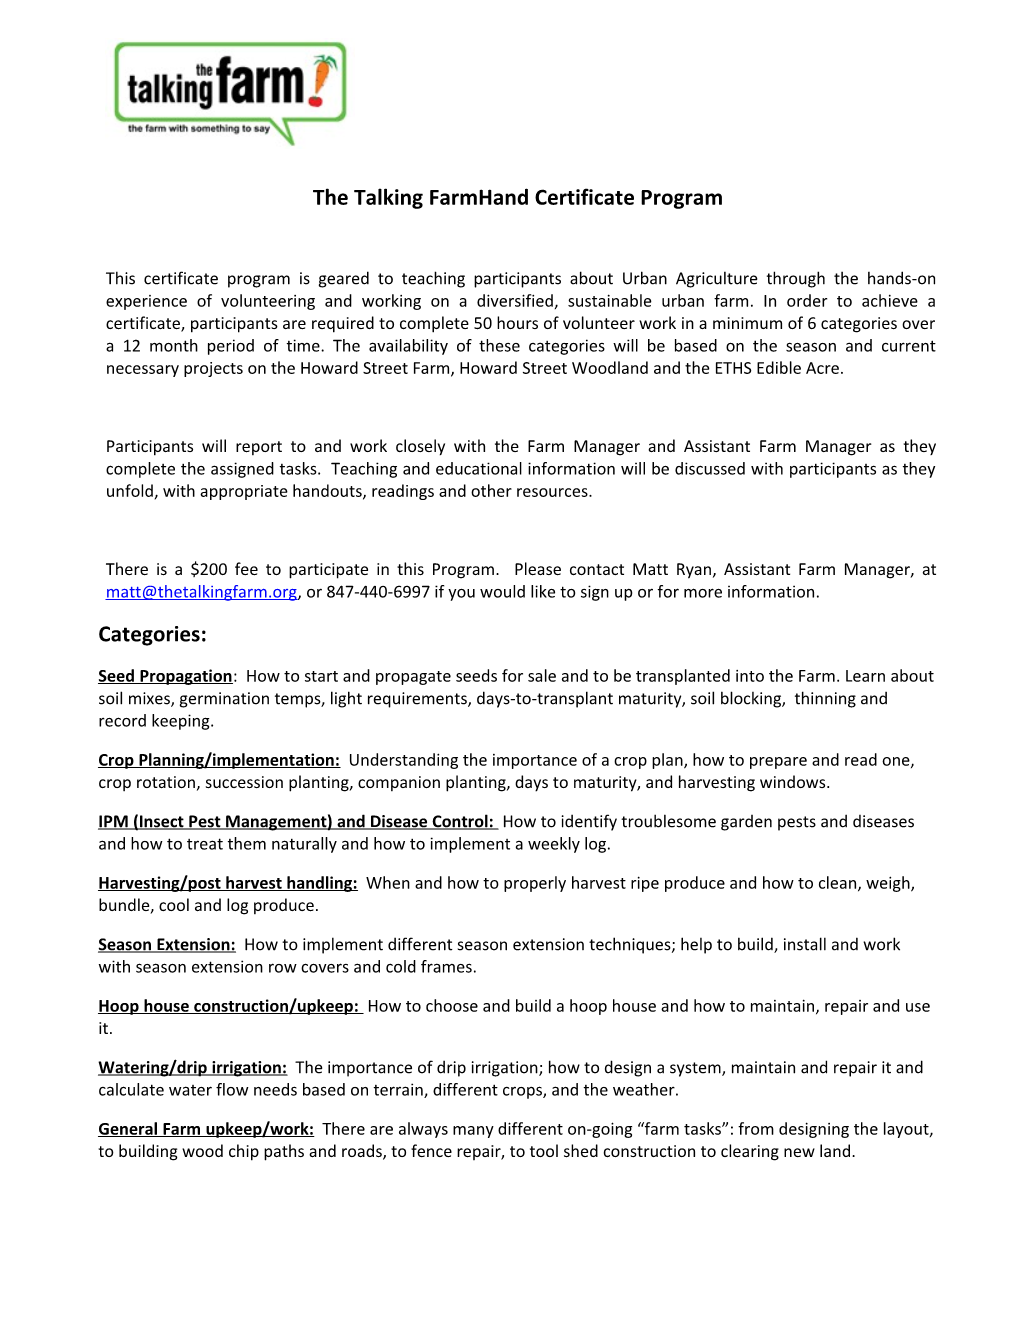 The Talking Farmhand Certificateprogram